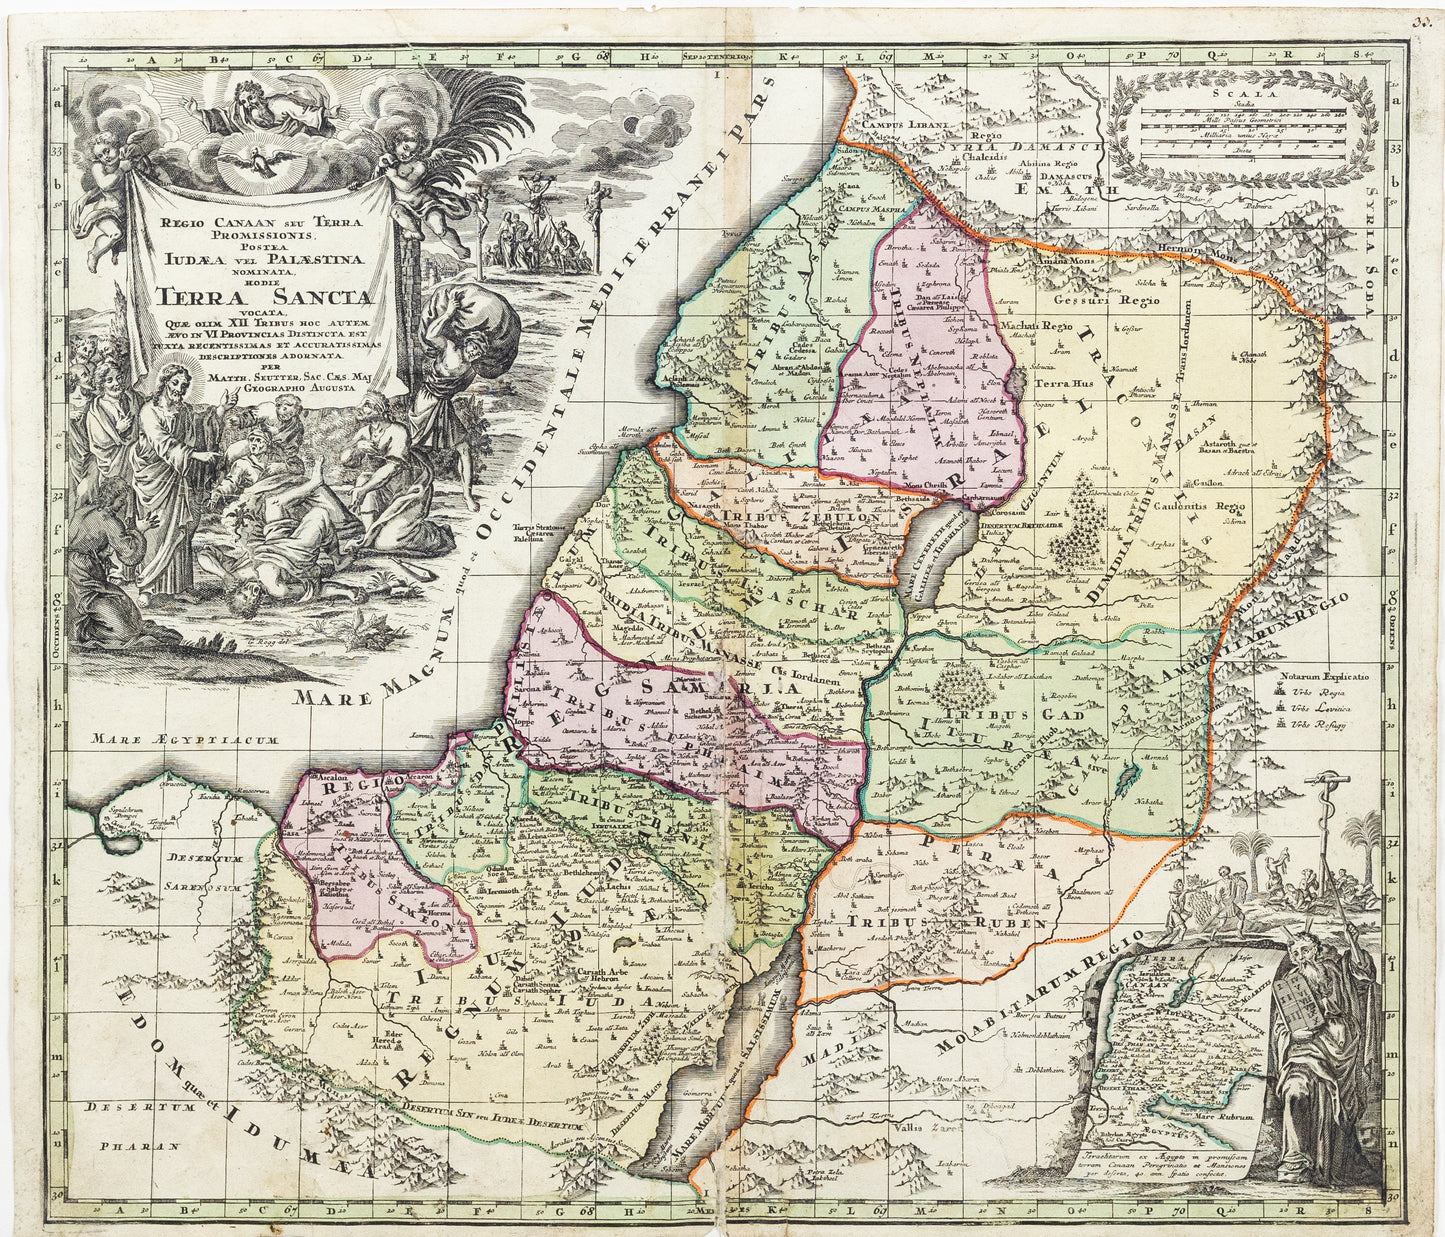 Matt. Seutter. Regio Canaan seu Terra Profissionais postea Judaea vel Palaestina nominata hodie Terra Sancta.  Augsburg: ca. 1730